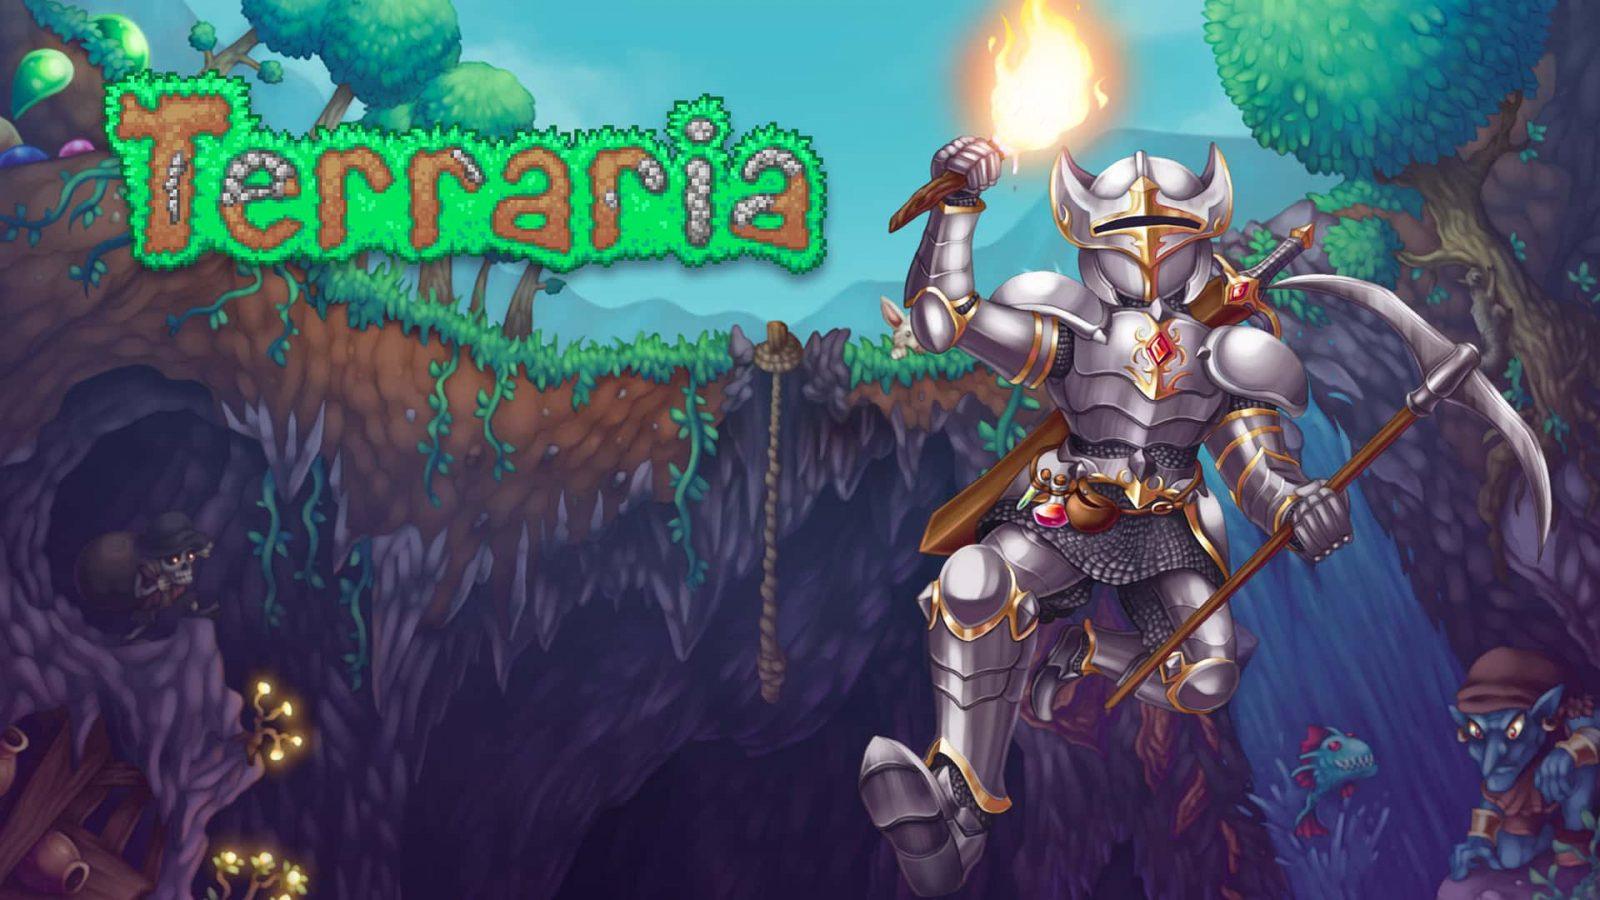 Terraria is working on cross platform multiplayer 🎮 #gaming